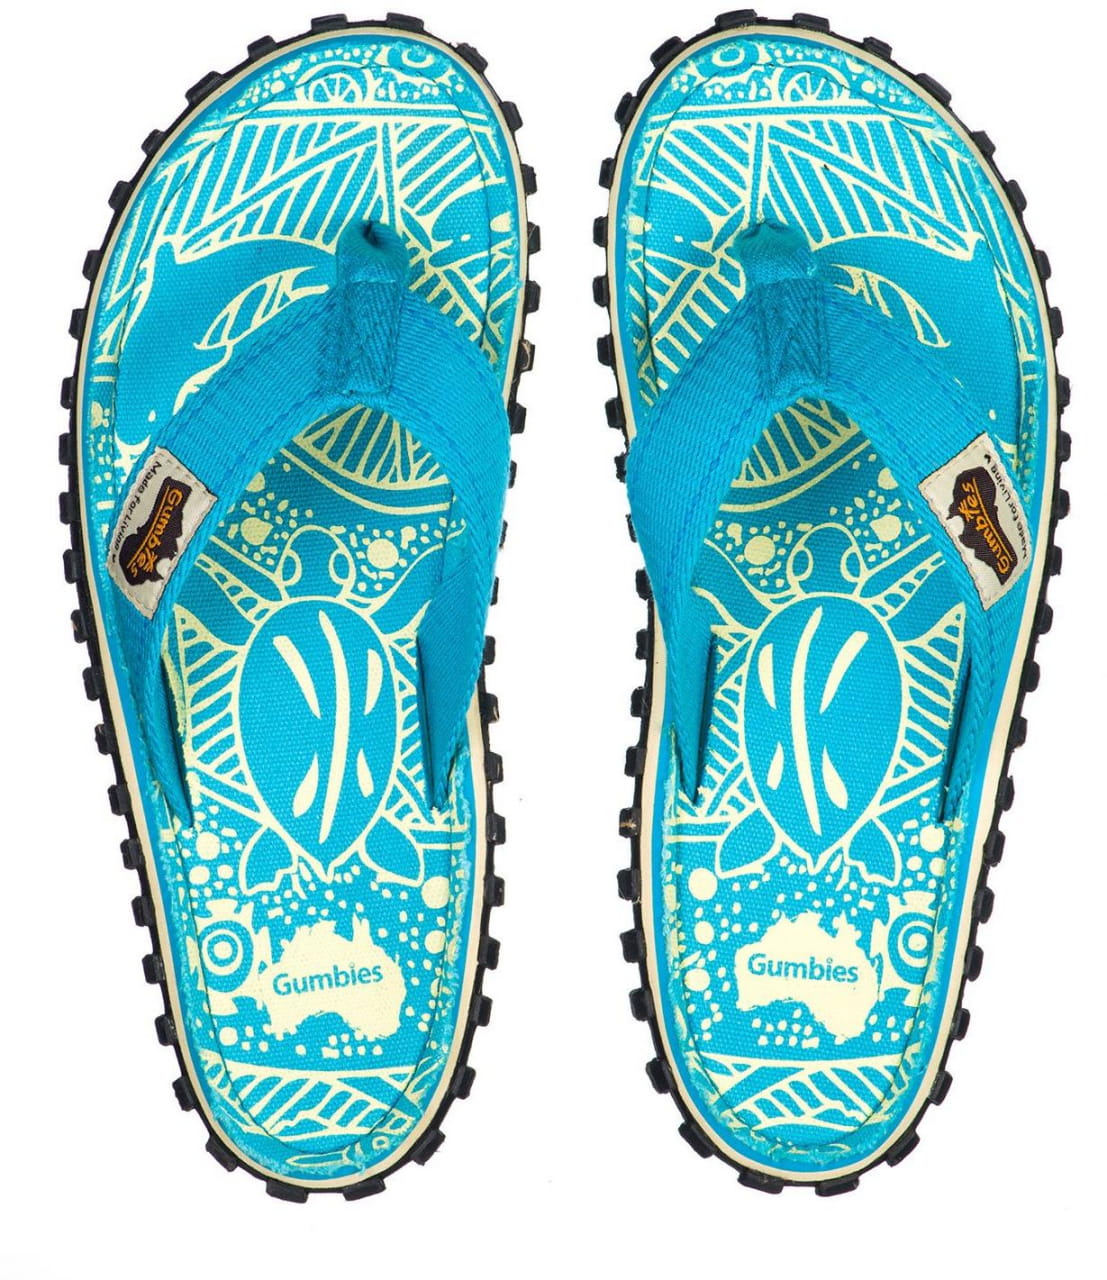 Letní obuv do města i do přírody Gumbies Islander Turquoise Signature